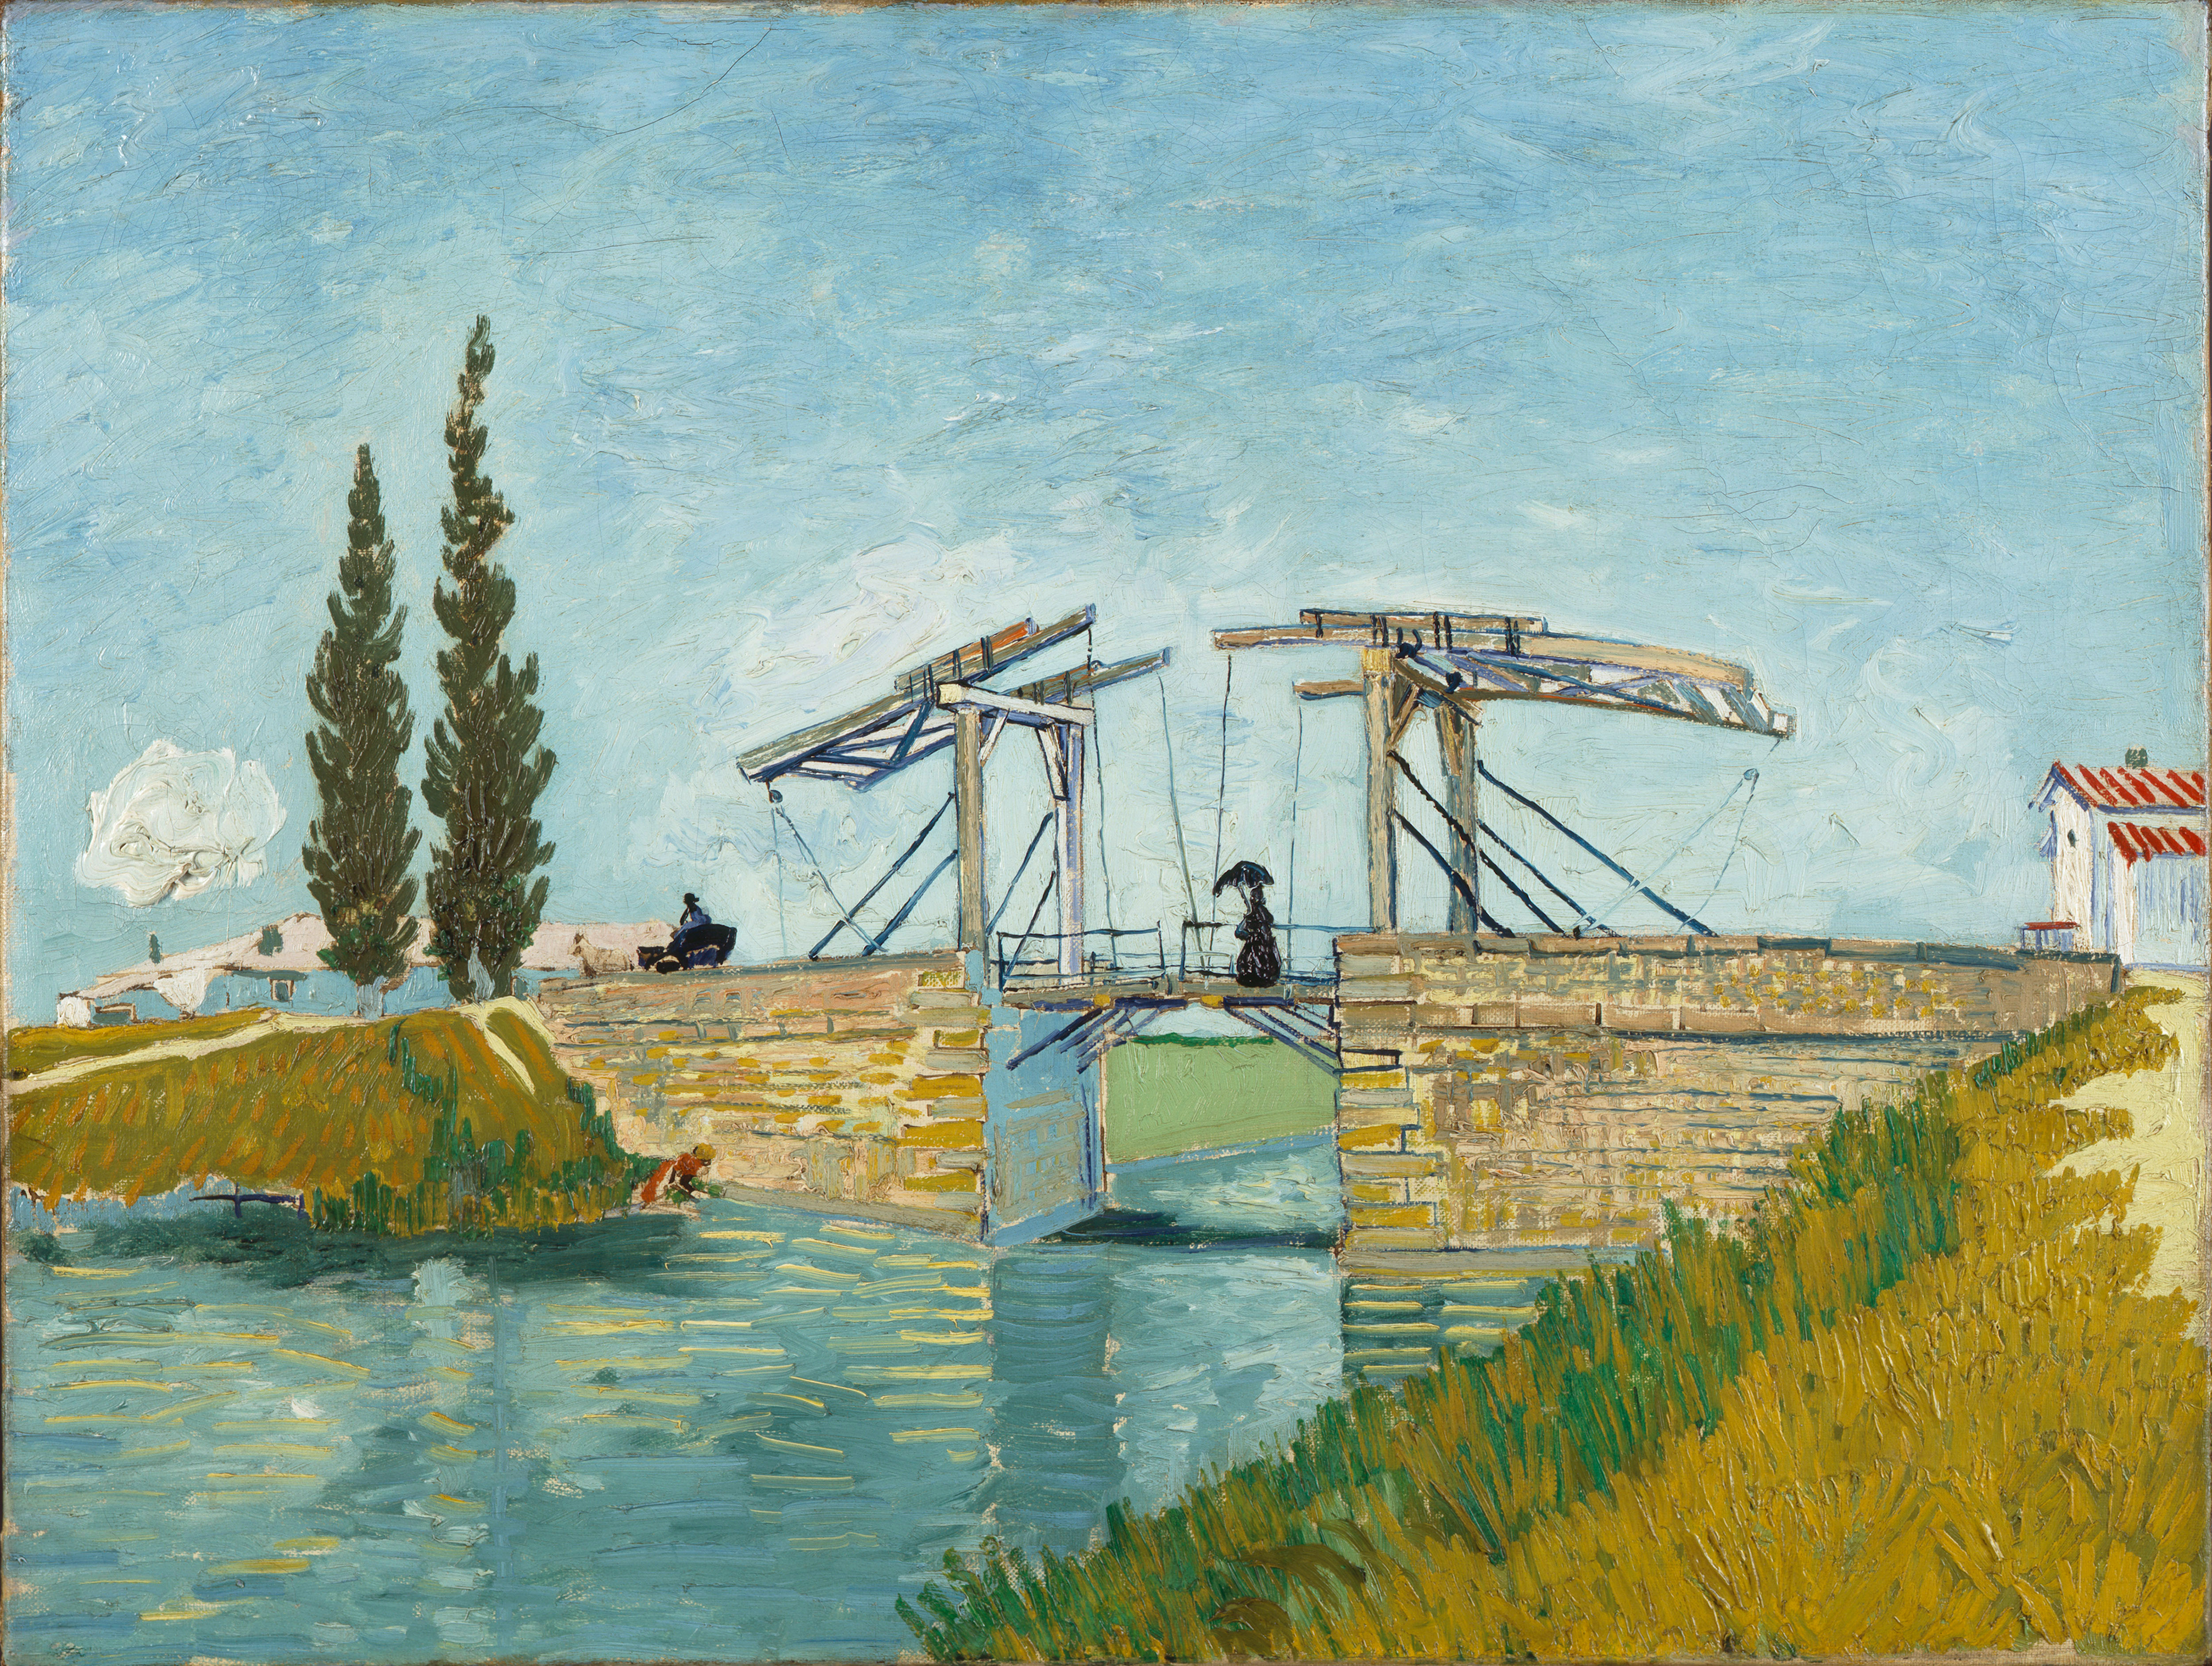 Vincent van Gogh - Landscape at Twilight - Van Gogh Museum